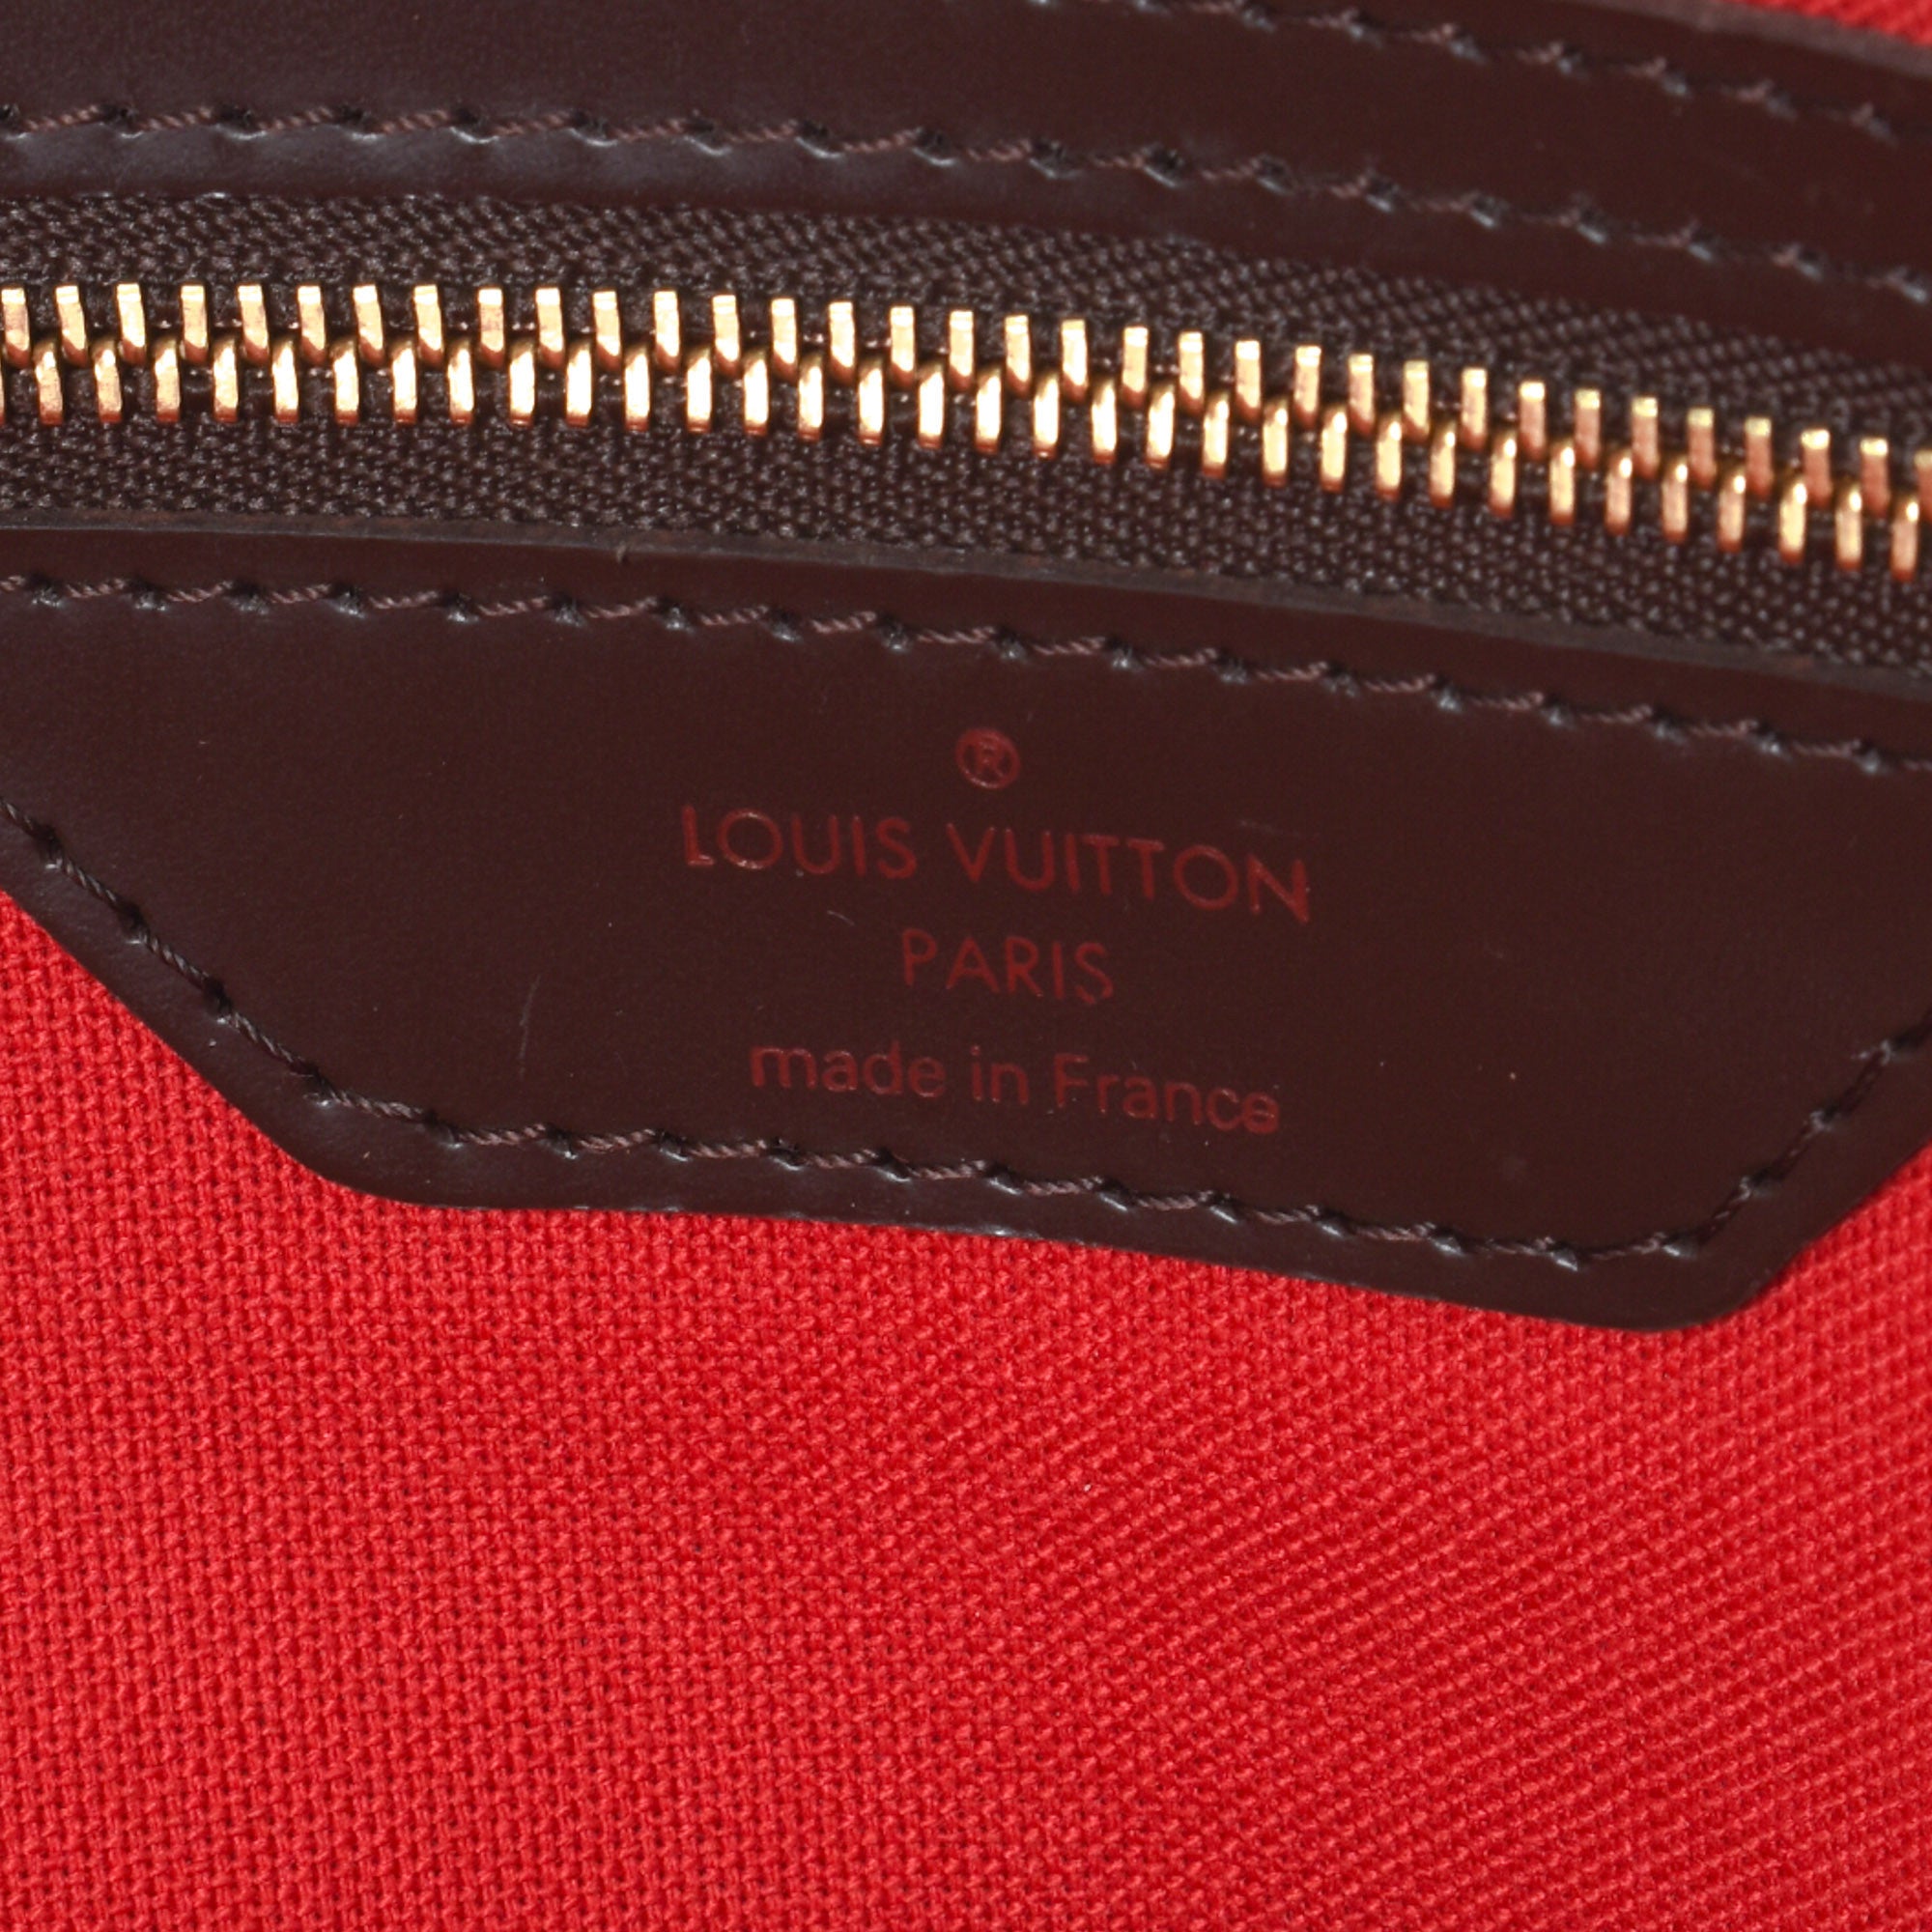 Louis Vuitton Chelsea Tote Handbag